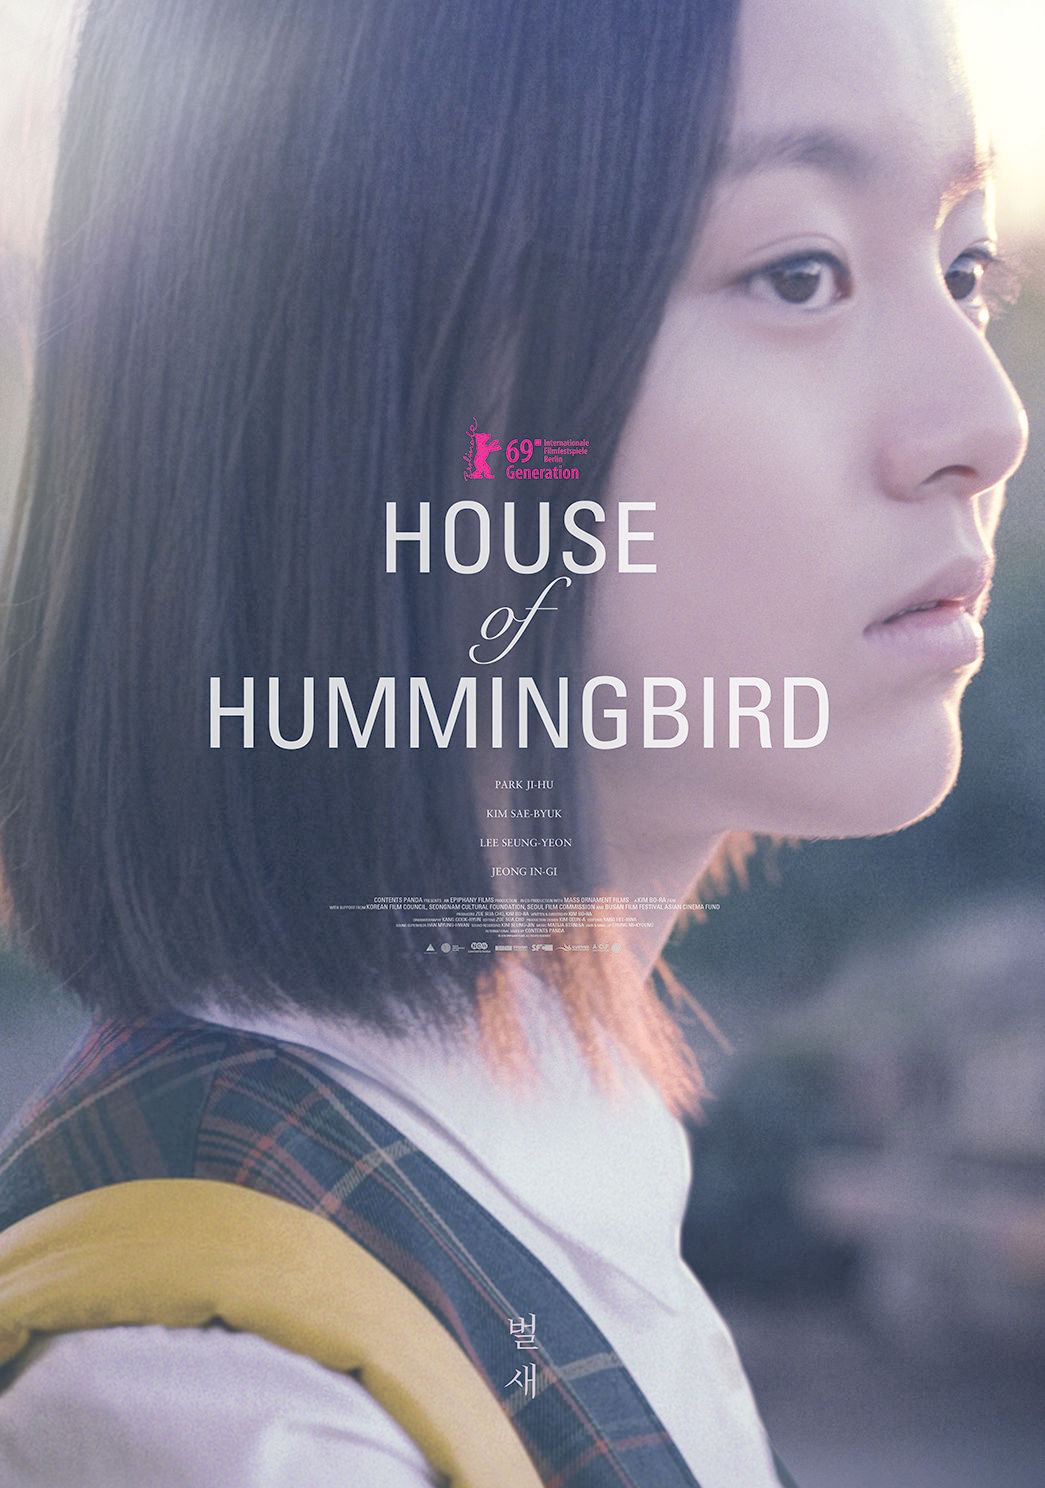 House of Hummingbird (2018) ★★★★☆